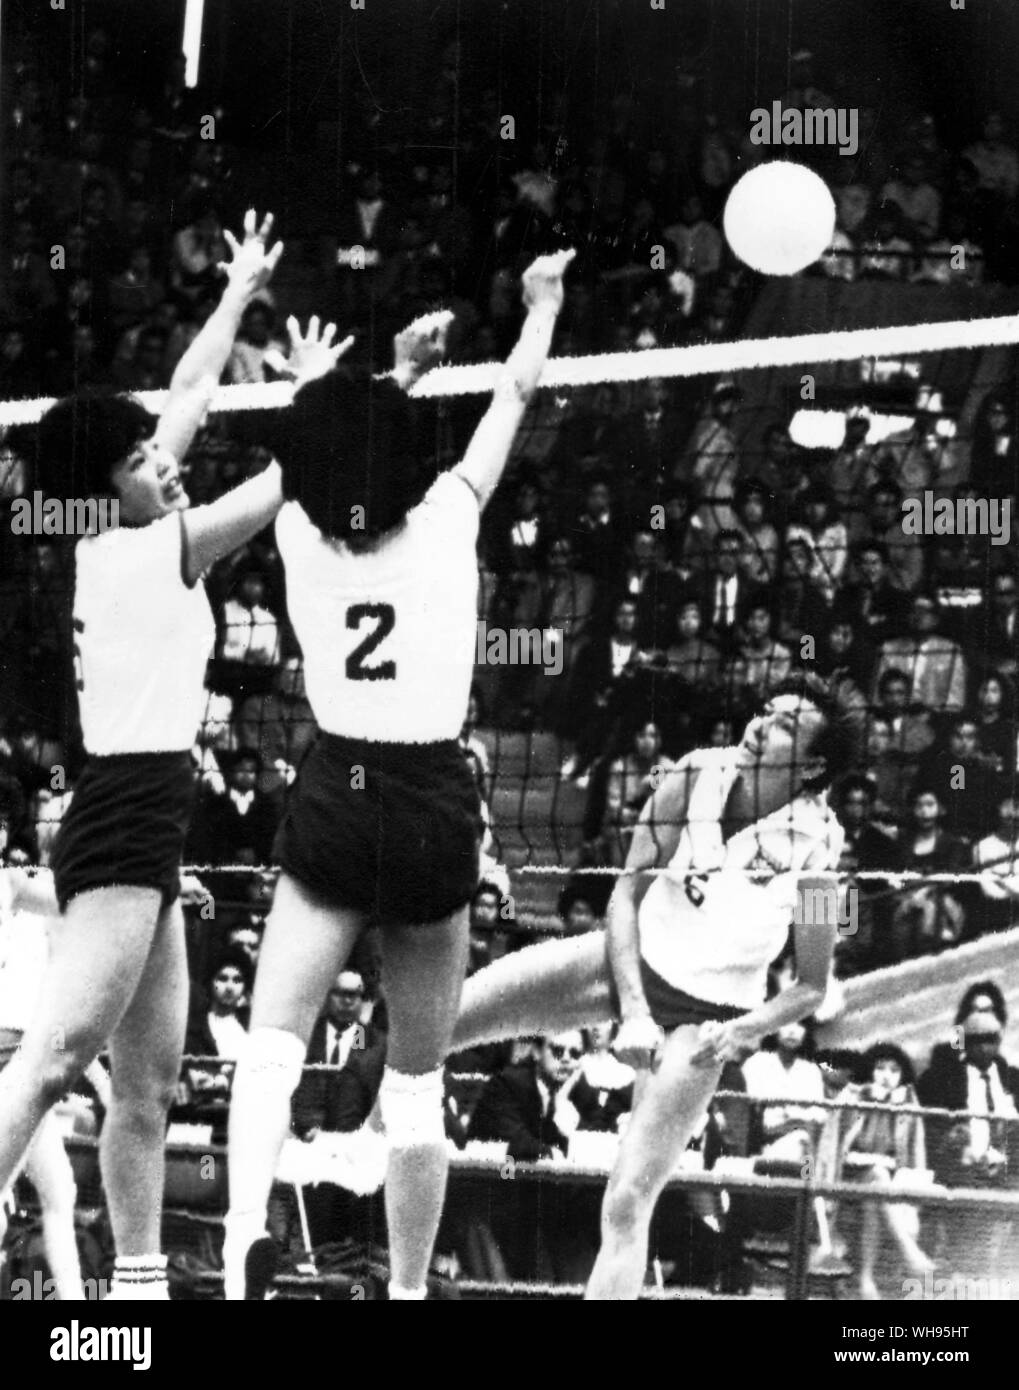 Japan, Tokyo Olympics, 1964: Women's volleyball between Japan and Poland. Japan's Miyamoto (#2) and Matsunura (#5) leap to block a shot from Poland's Kordaczeuk.. Stock Photo